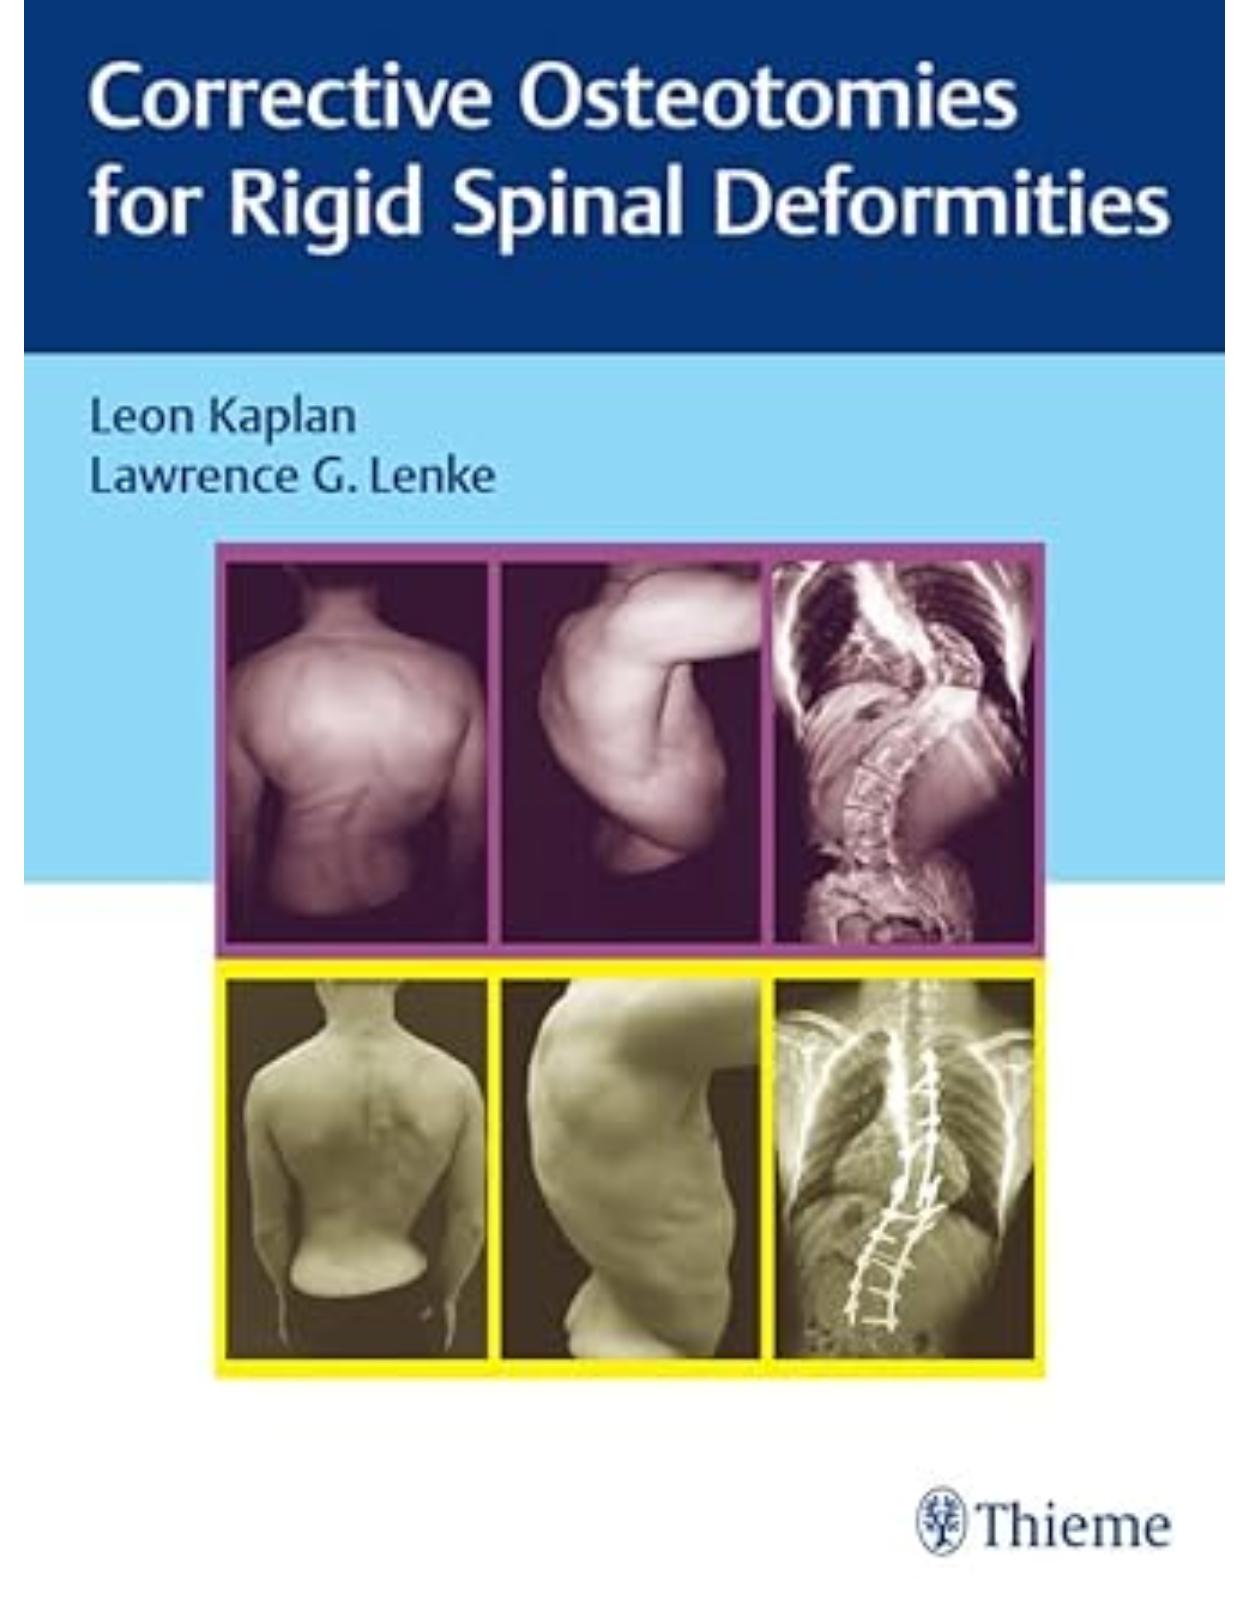 Corrective Osteotomies for Rigid Spinal Deformities